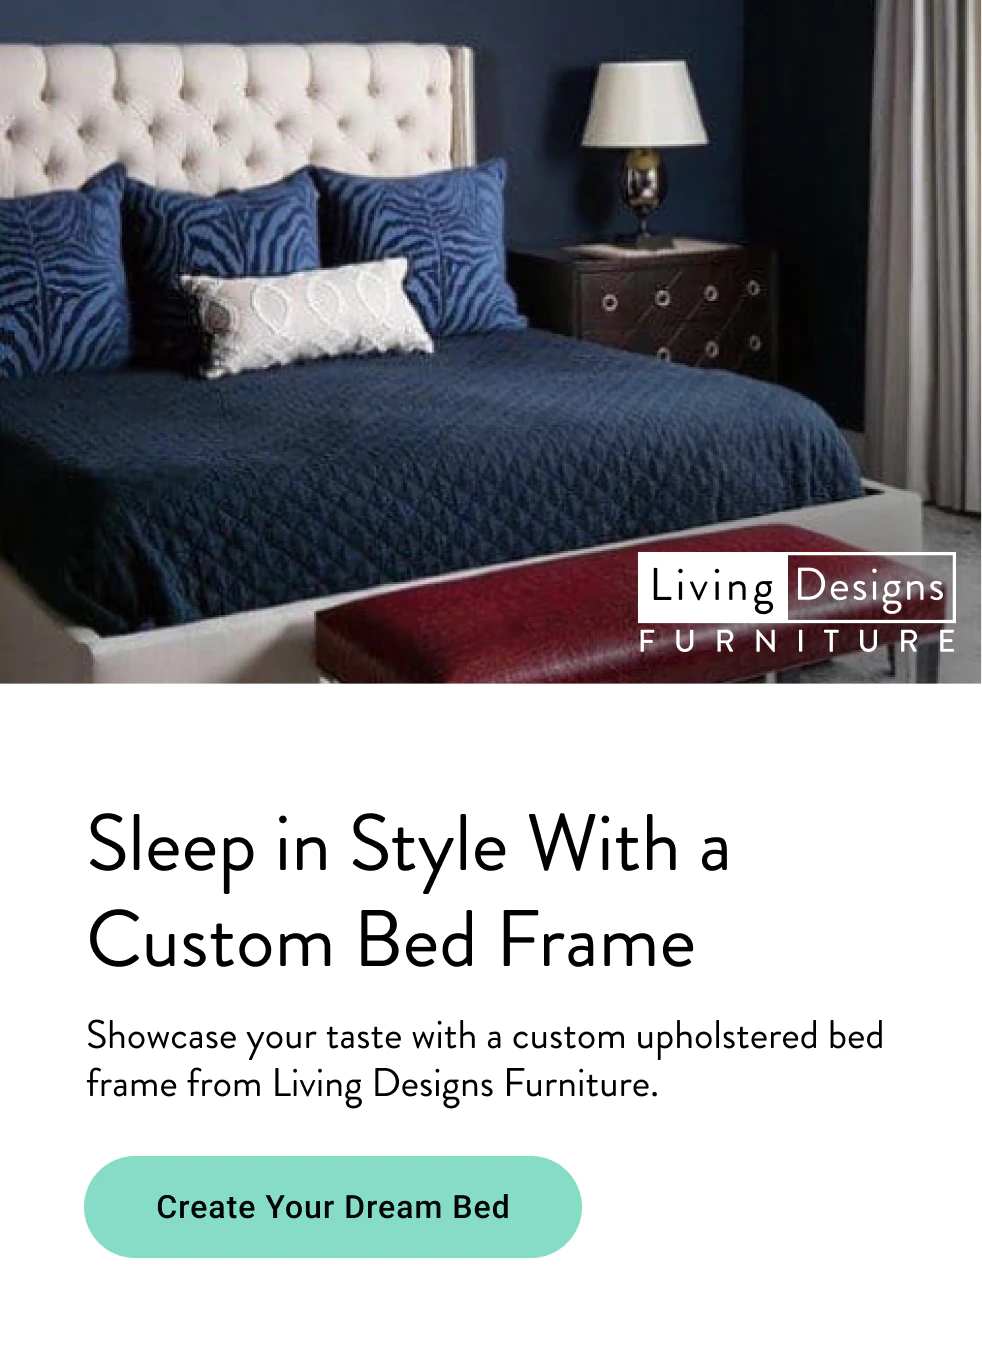 Living Designs Furniture